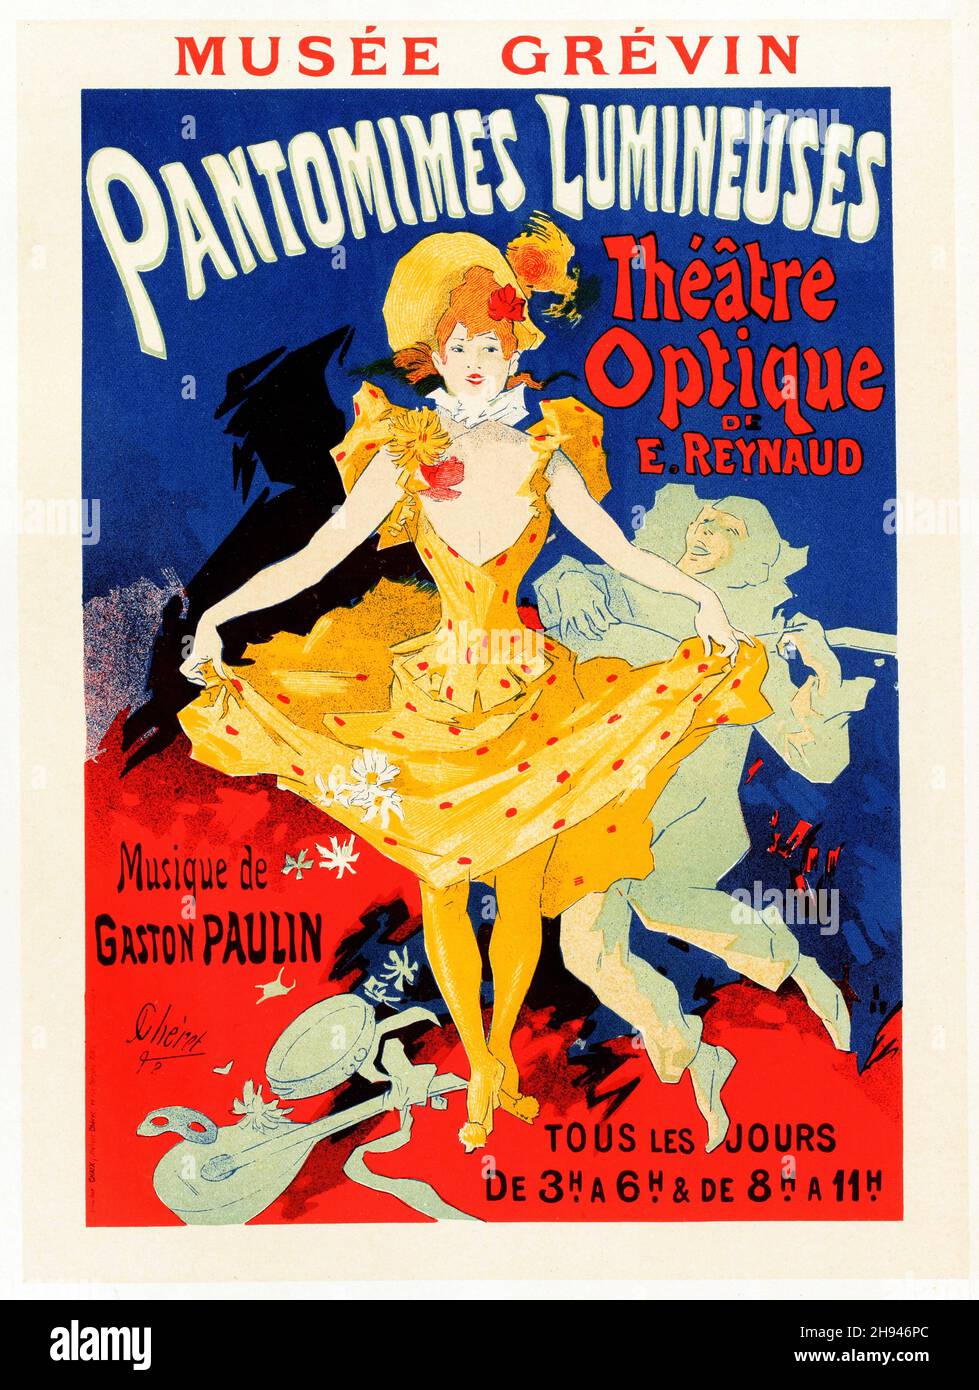 Musee Grevin, Pantomimes Lumineuses, Theatre optique de E. Reynaud, musique de Gaston Paulin. Posterkunst von Jules Chéret (1836-1932). Französisch. 1892. Stockfoto